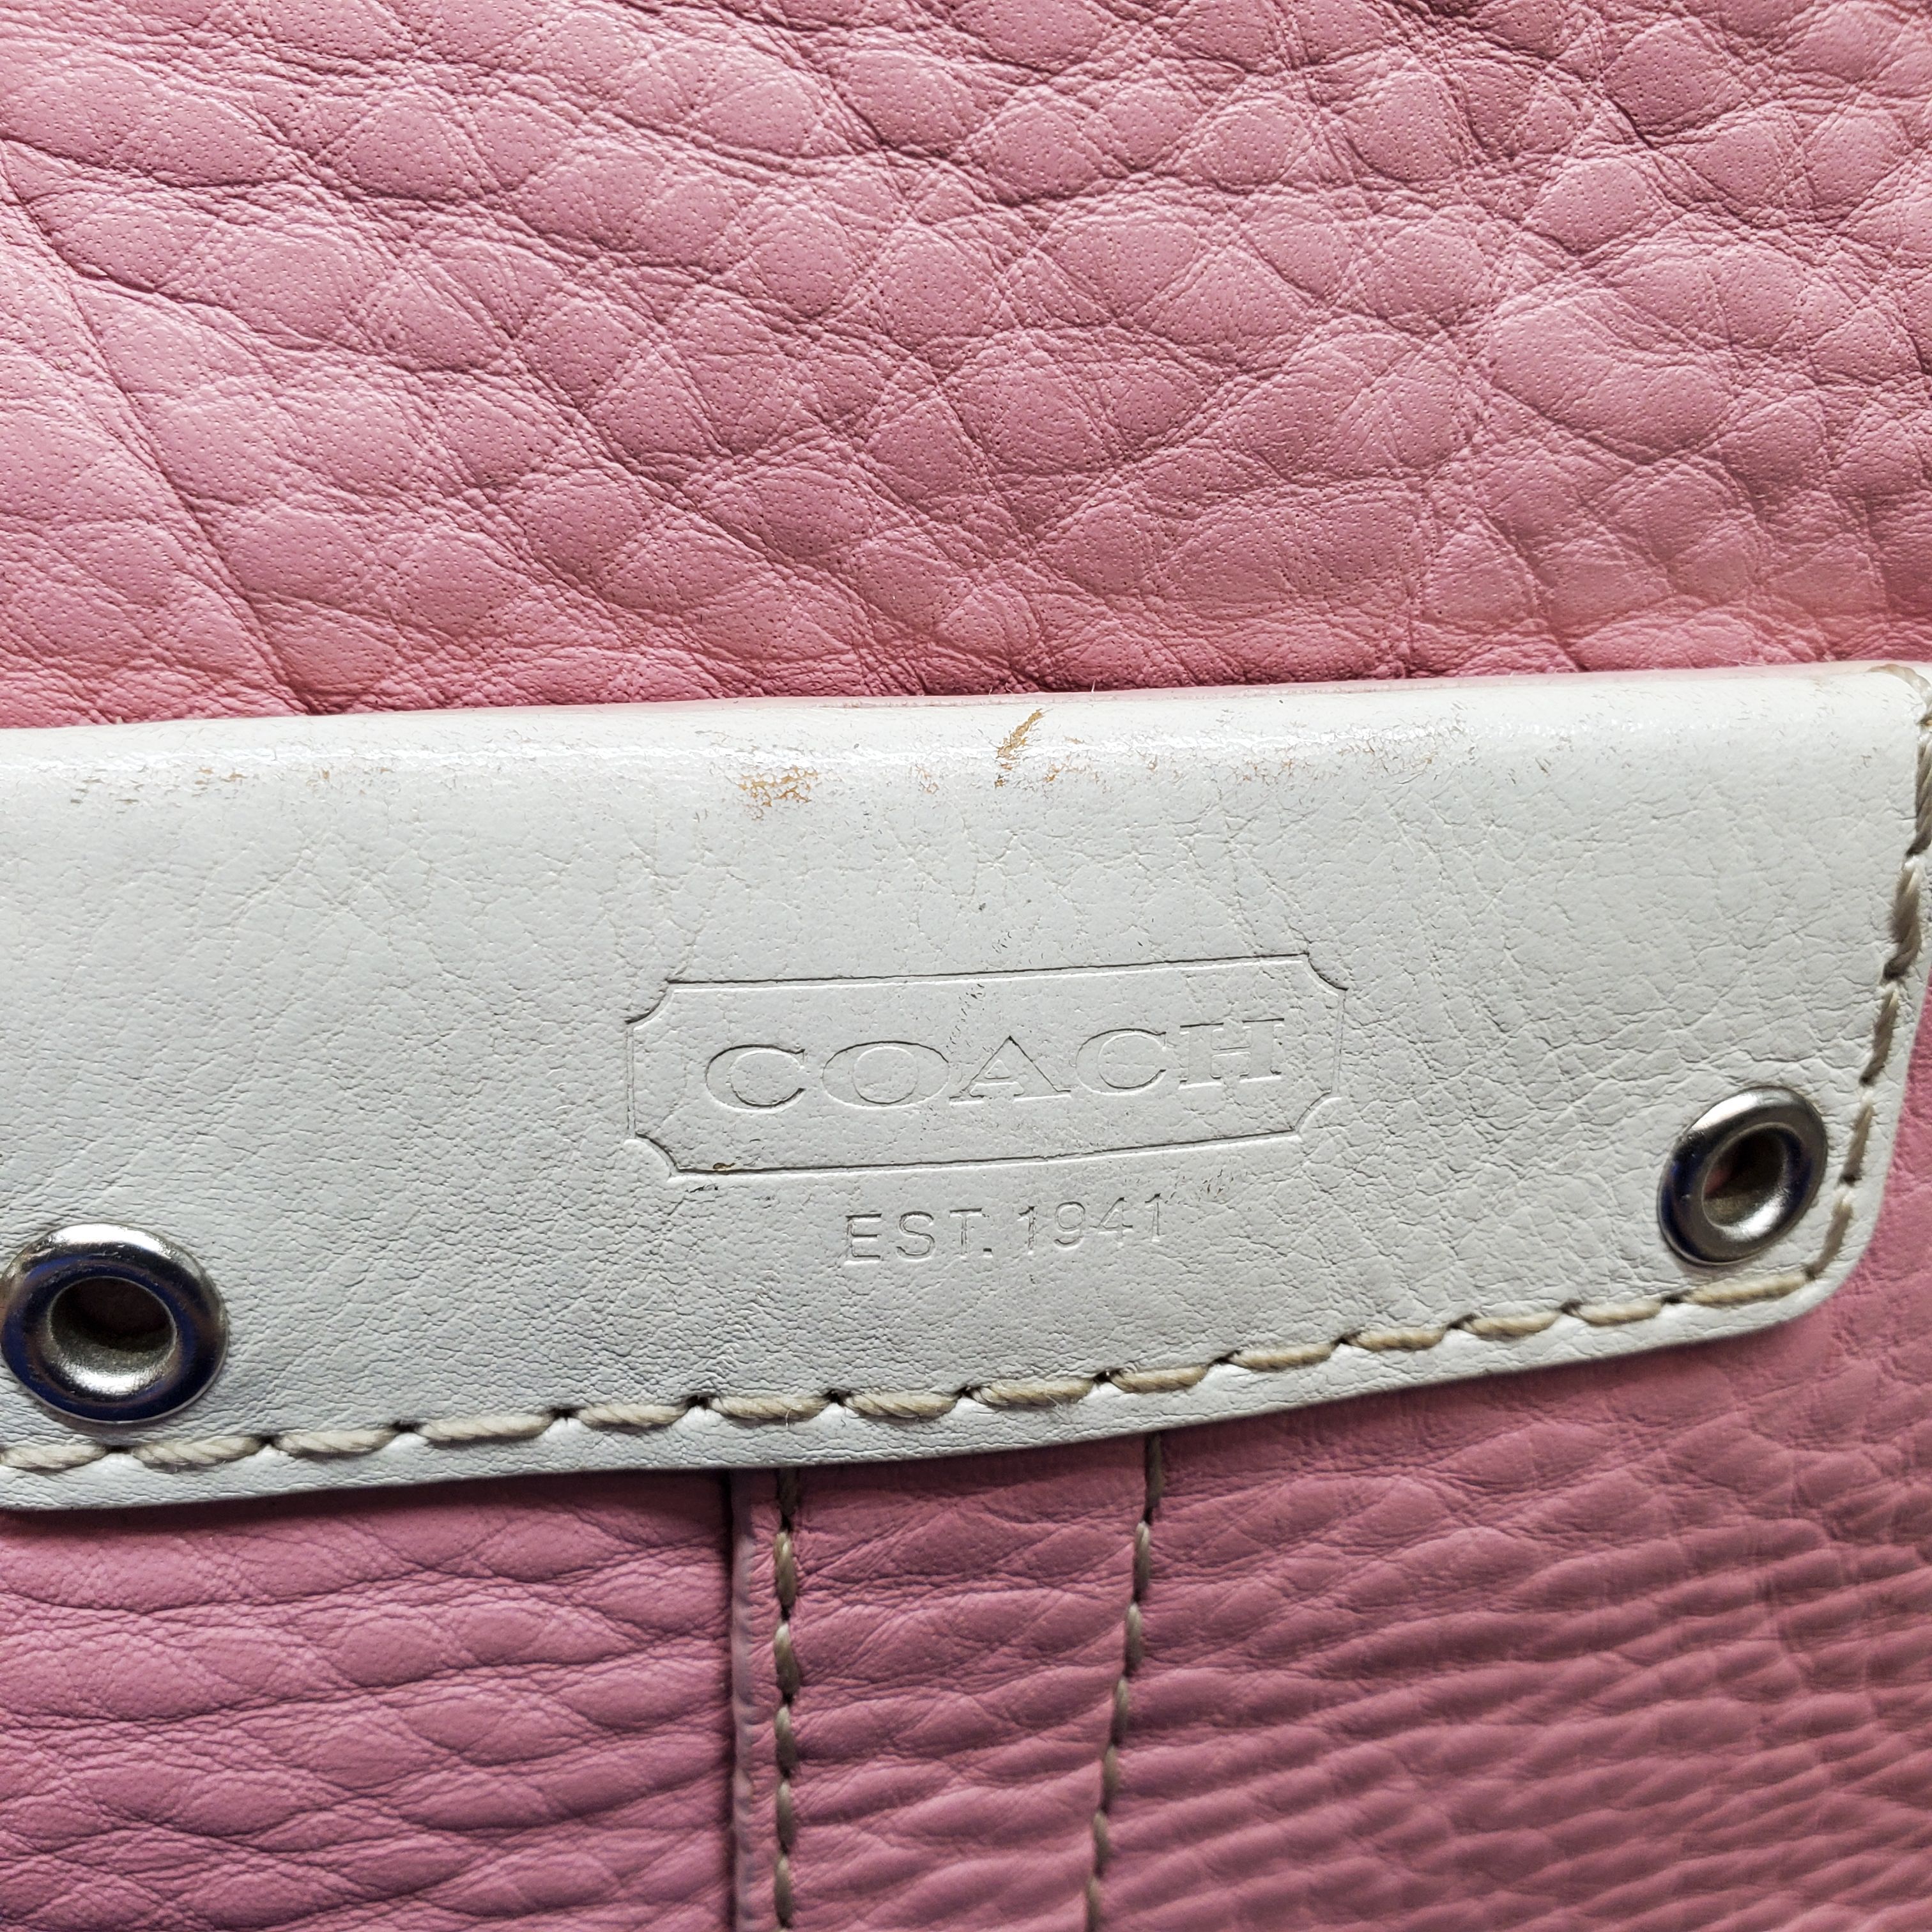 Coach Purse 19297 Kristin pink Patent Leather Tote Bag convertible | eBay